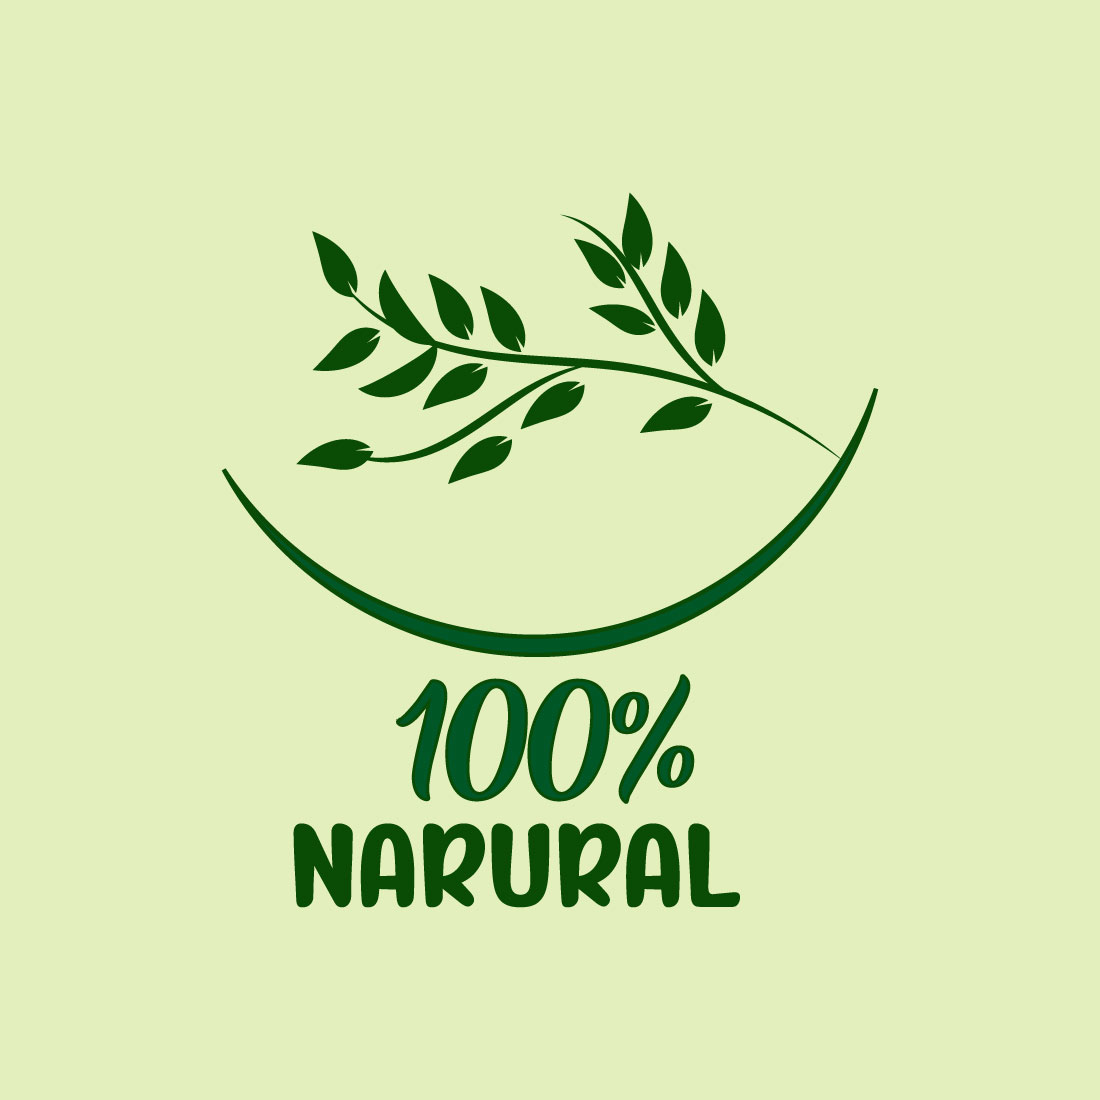 Free Green Organic leaf cover image.